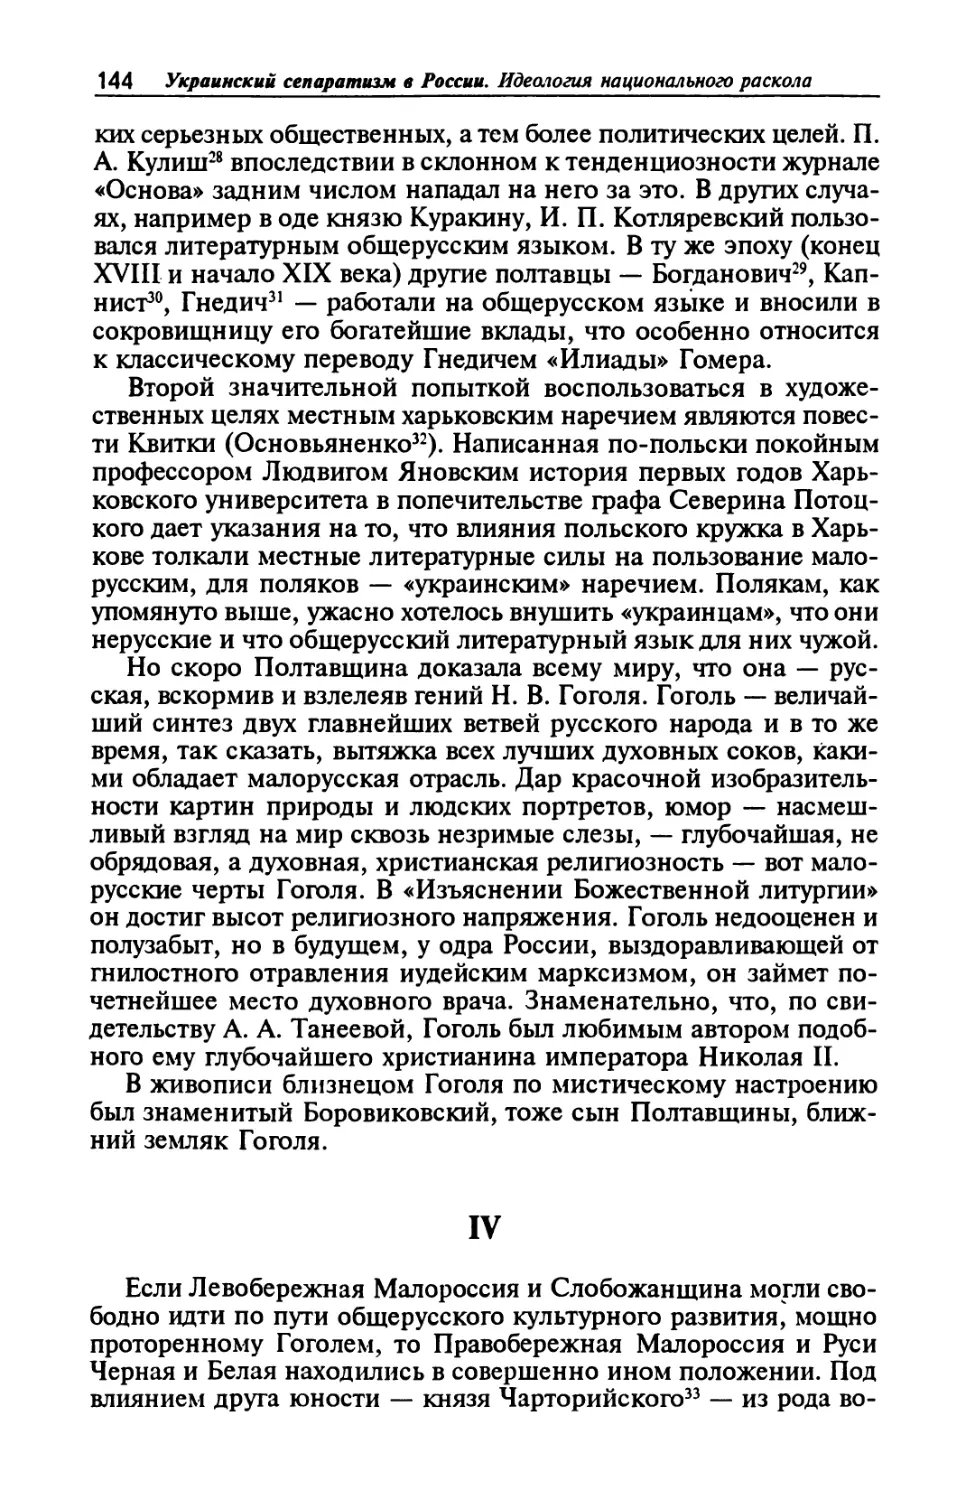 IV. Польское влияние со времени императора Александра I. — Шевченко